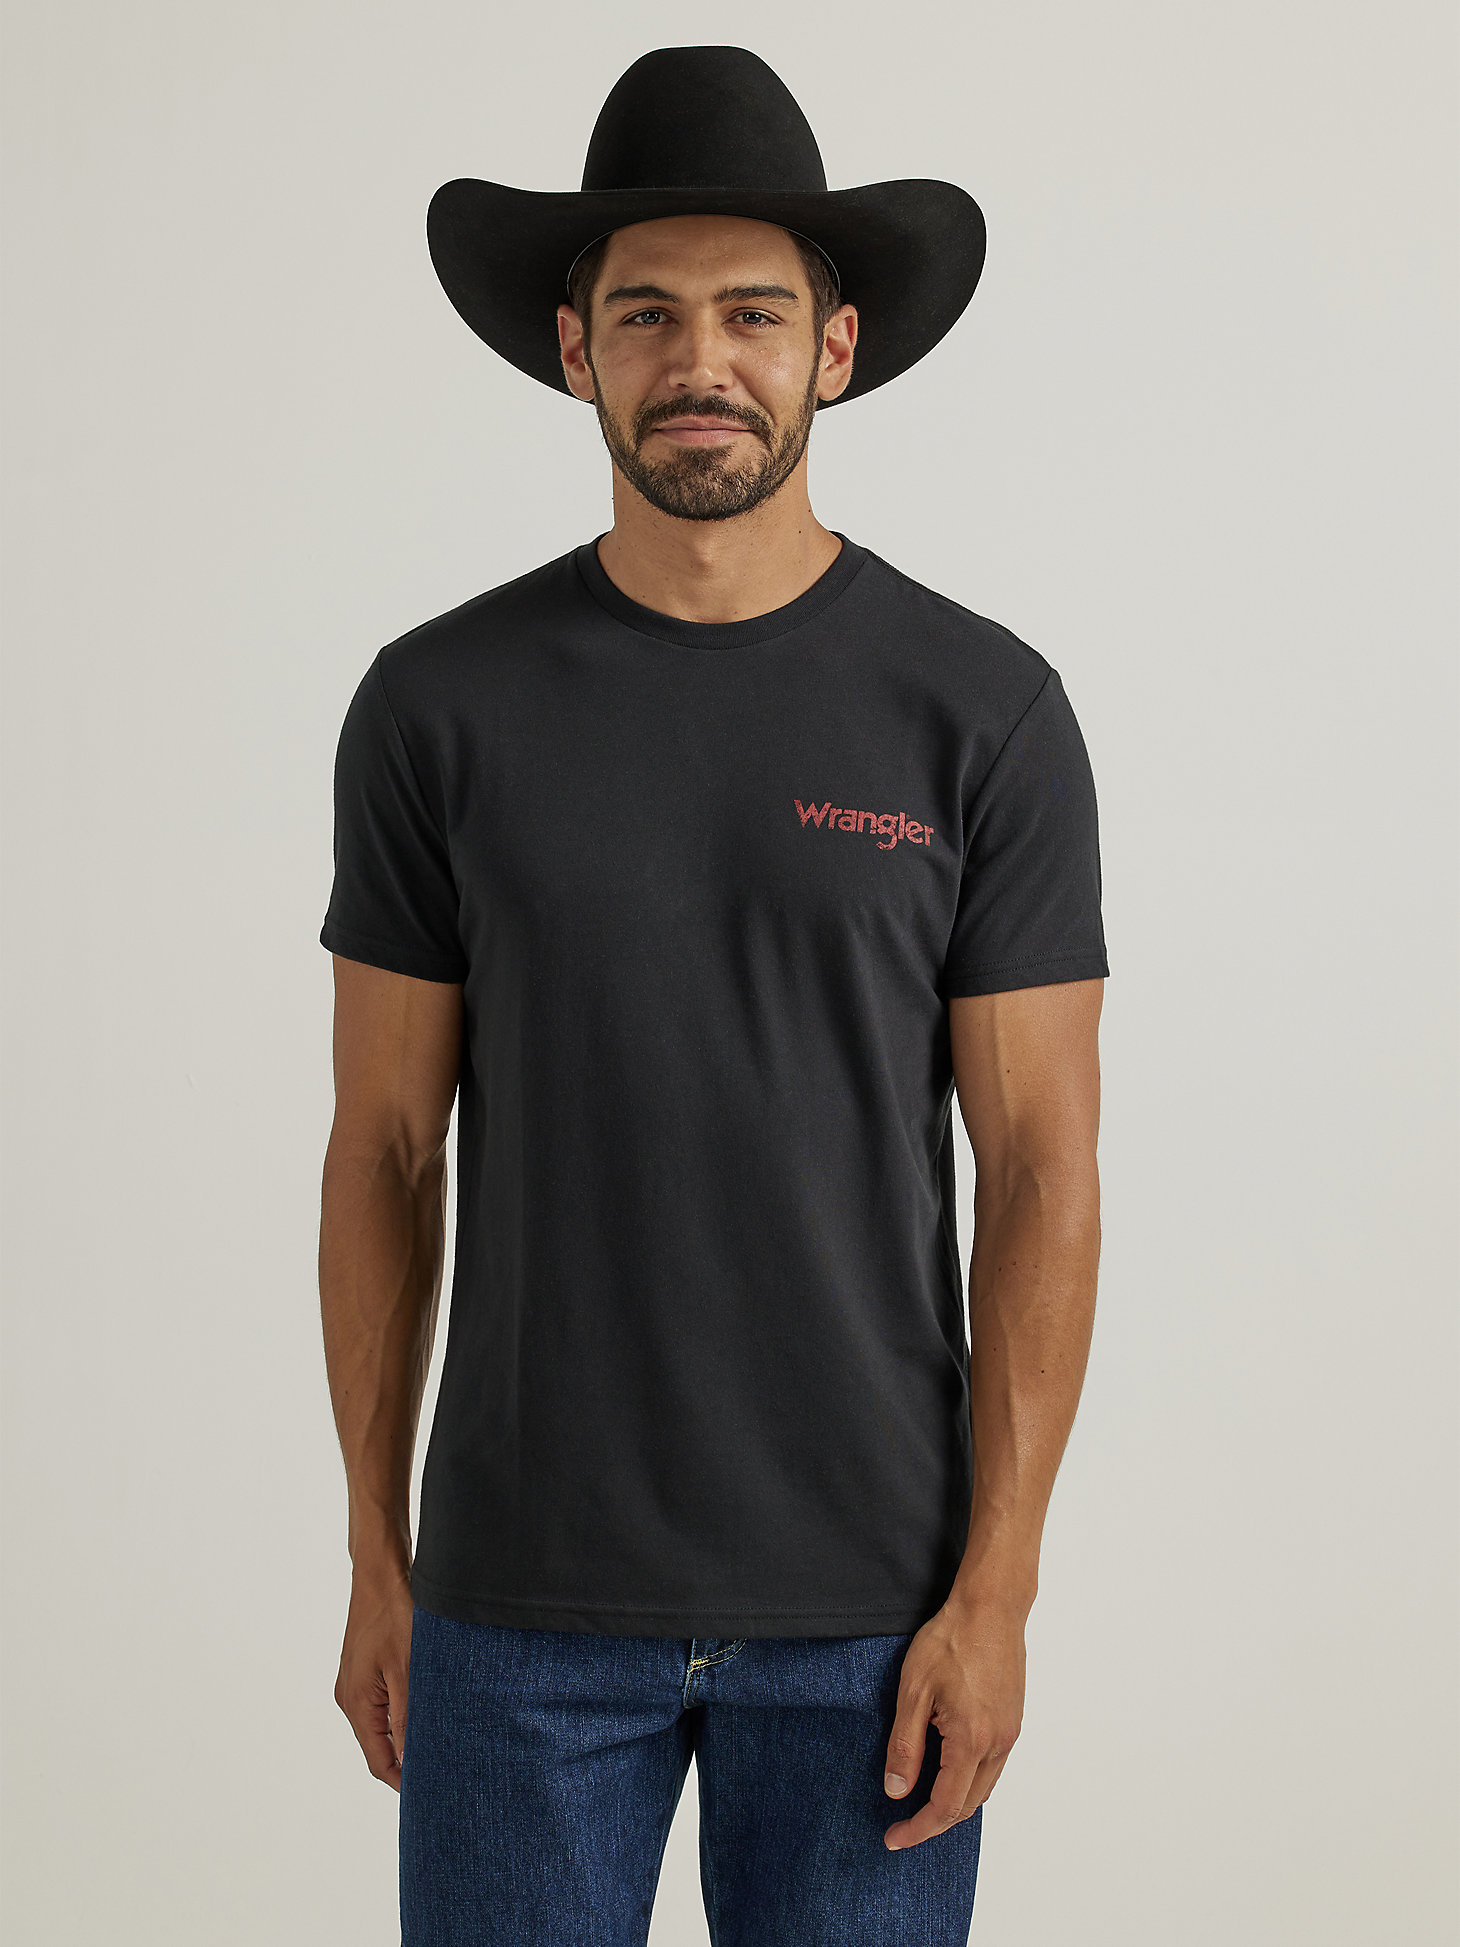 Wrangler® George Strait™ Back Graphic T-Shirt in Jet Black alternative view 1